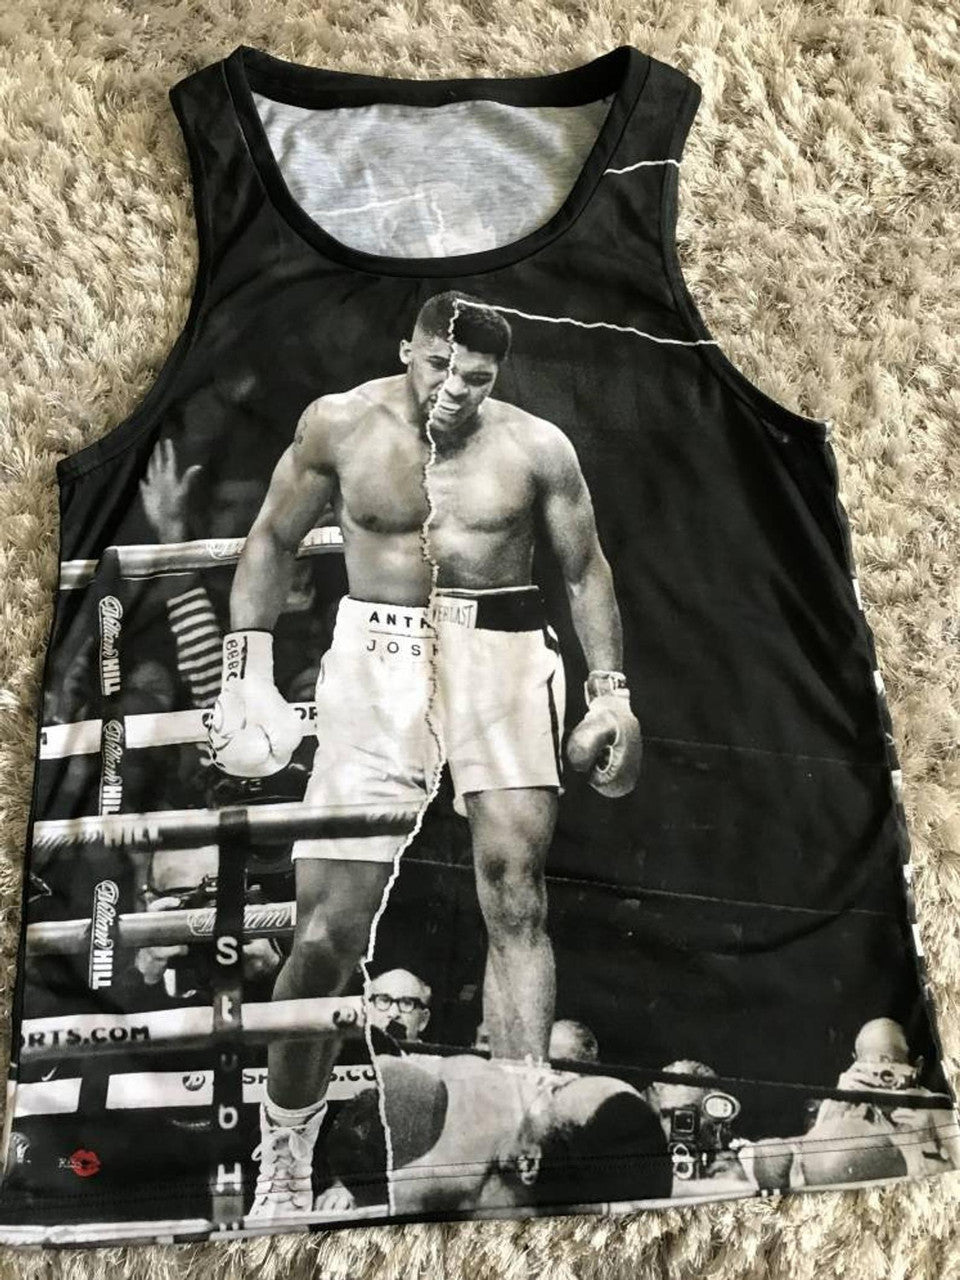 Muhammad Ali/Anthony Joshua KiSS Vest - half & half - Boxing knockout - present gift idea for him - Sports